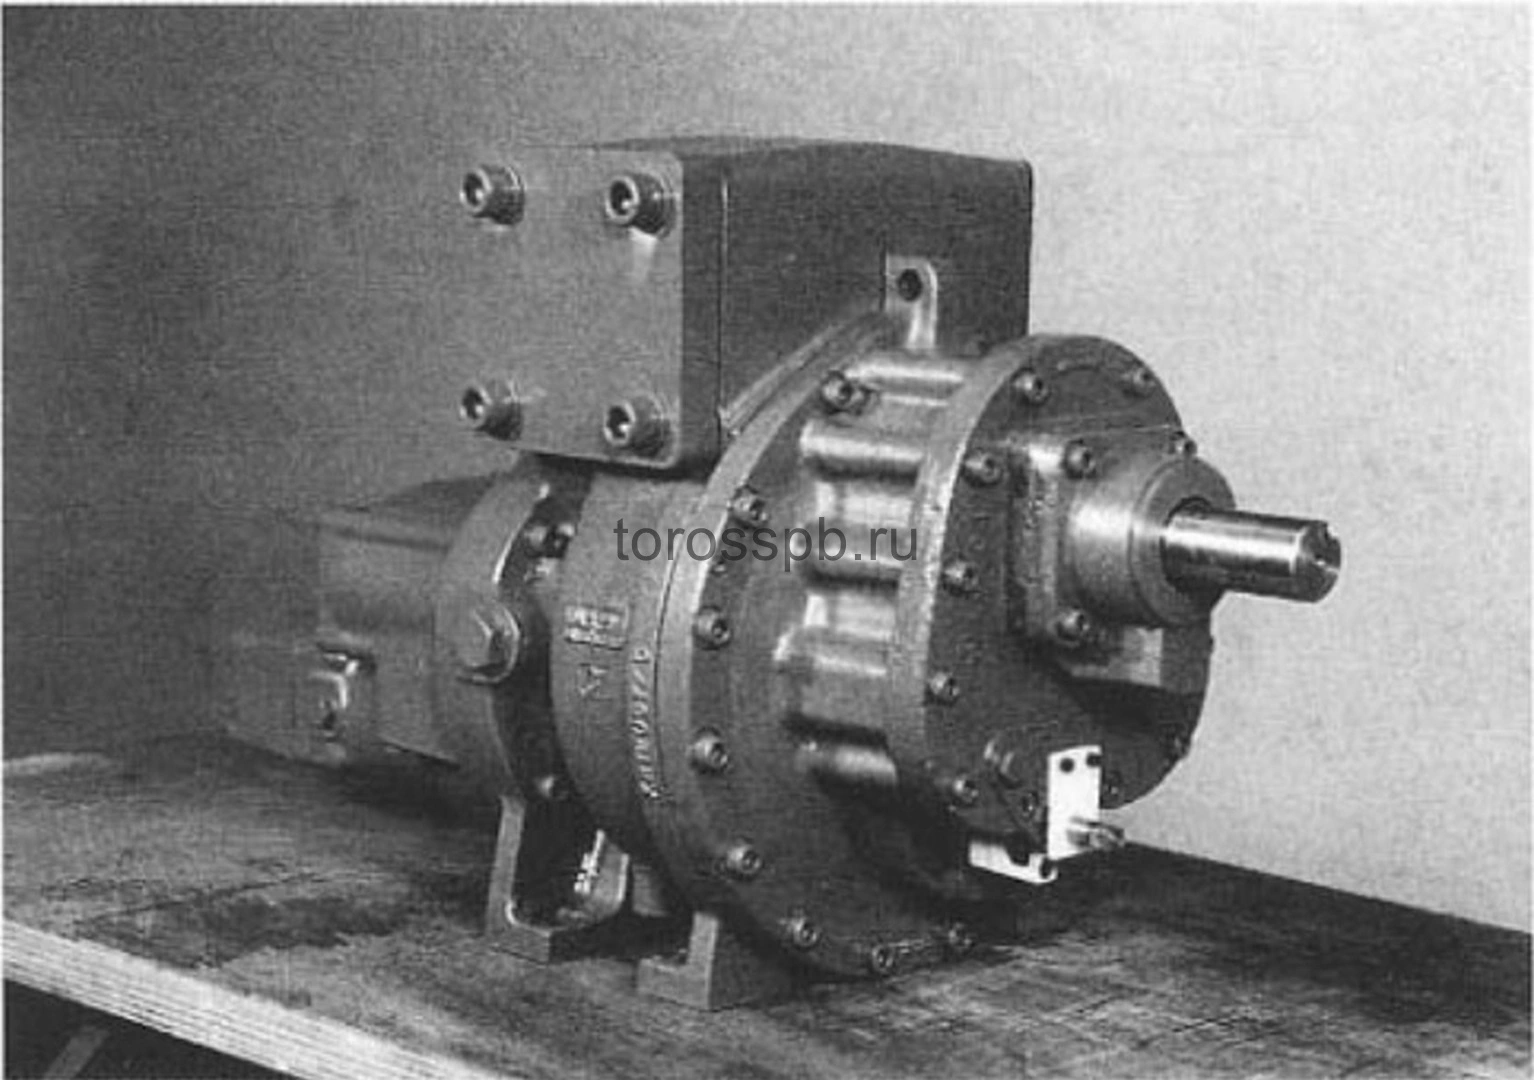 Fig.11 Dismantling the xrv127 compressor